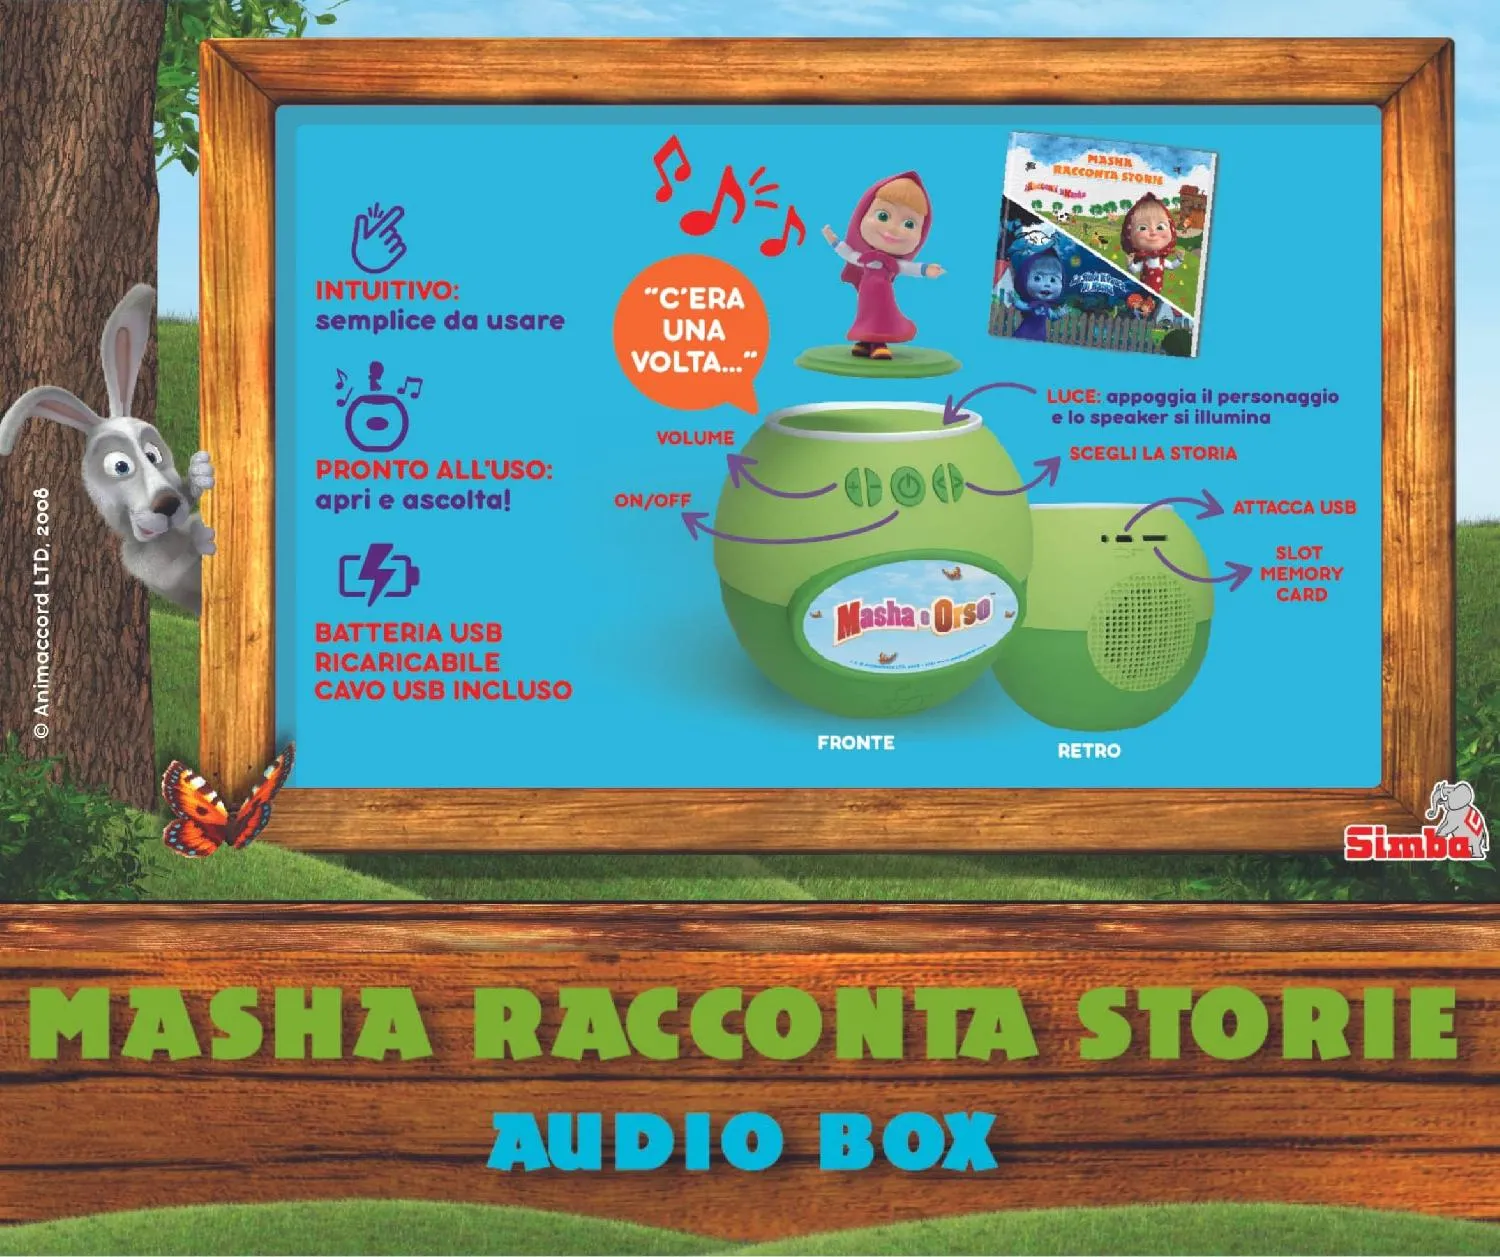 Simba 7101100076 Masha Racconta Storie - Audible Box Incluse 24 Storie -  130 Minuti, Catalogo prodotti